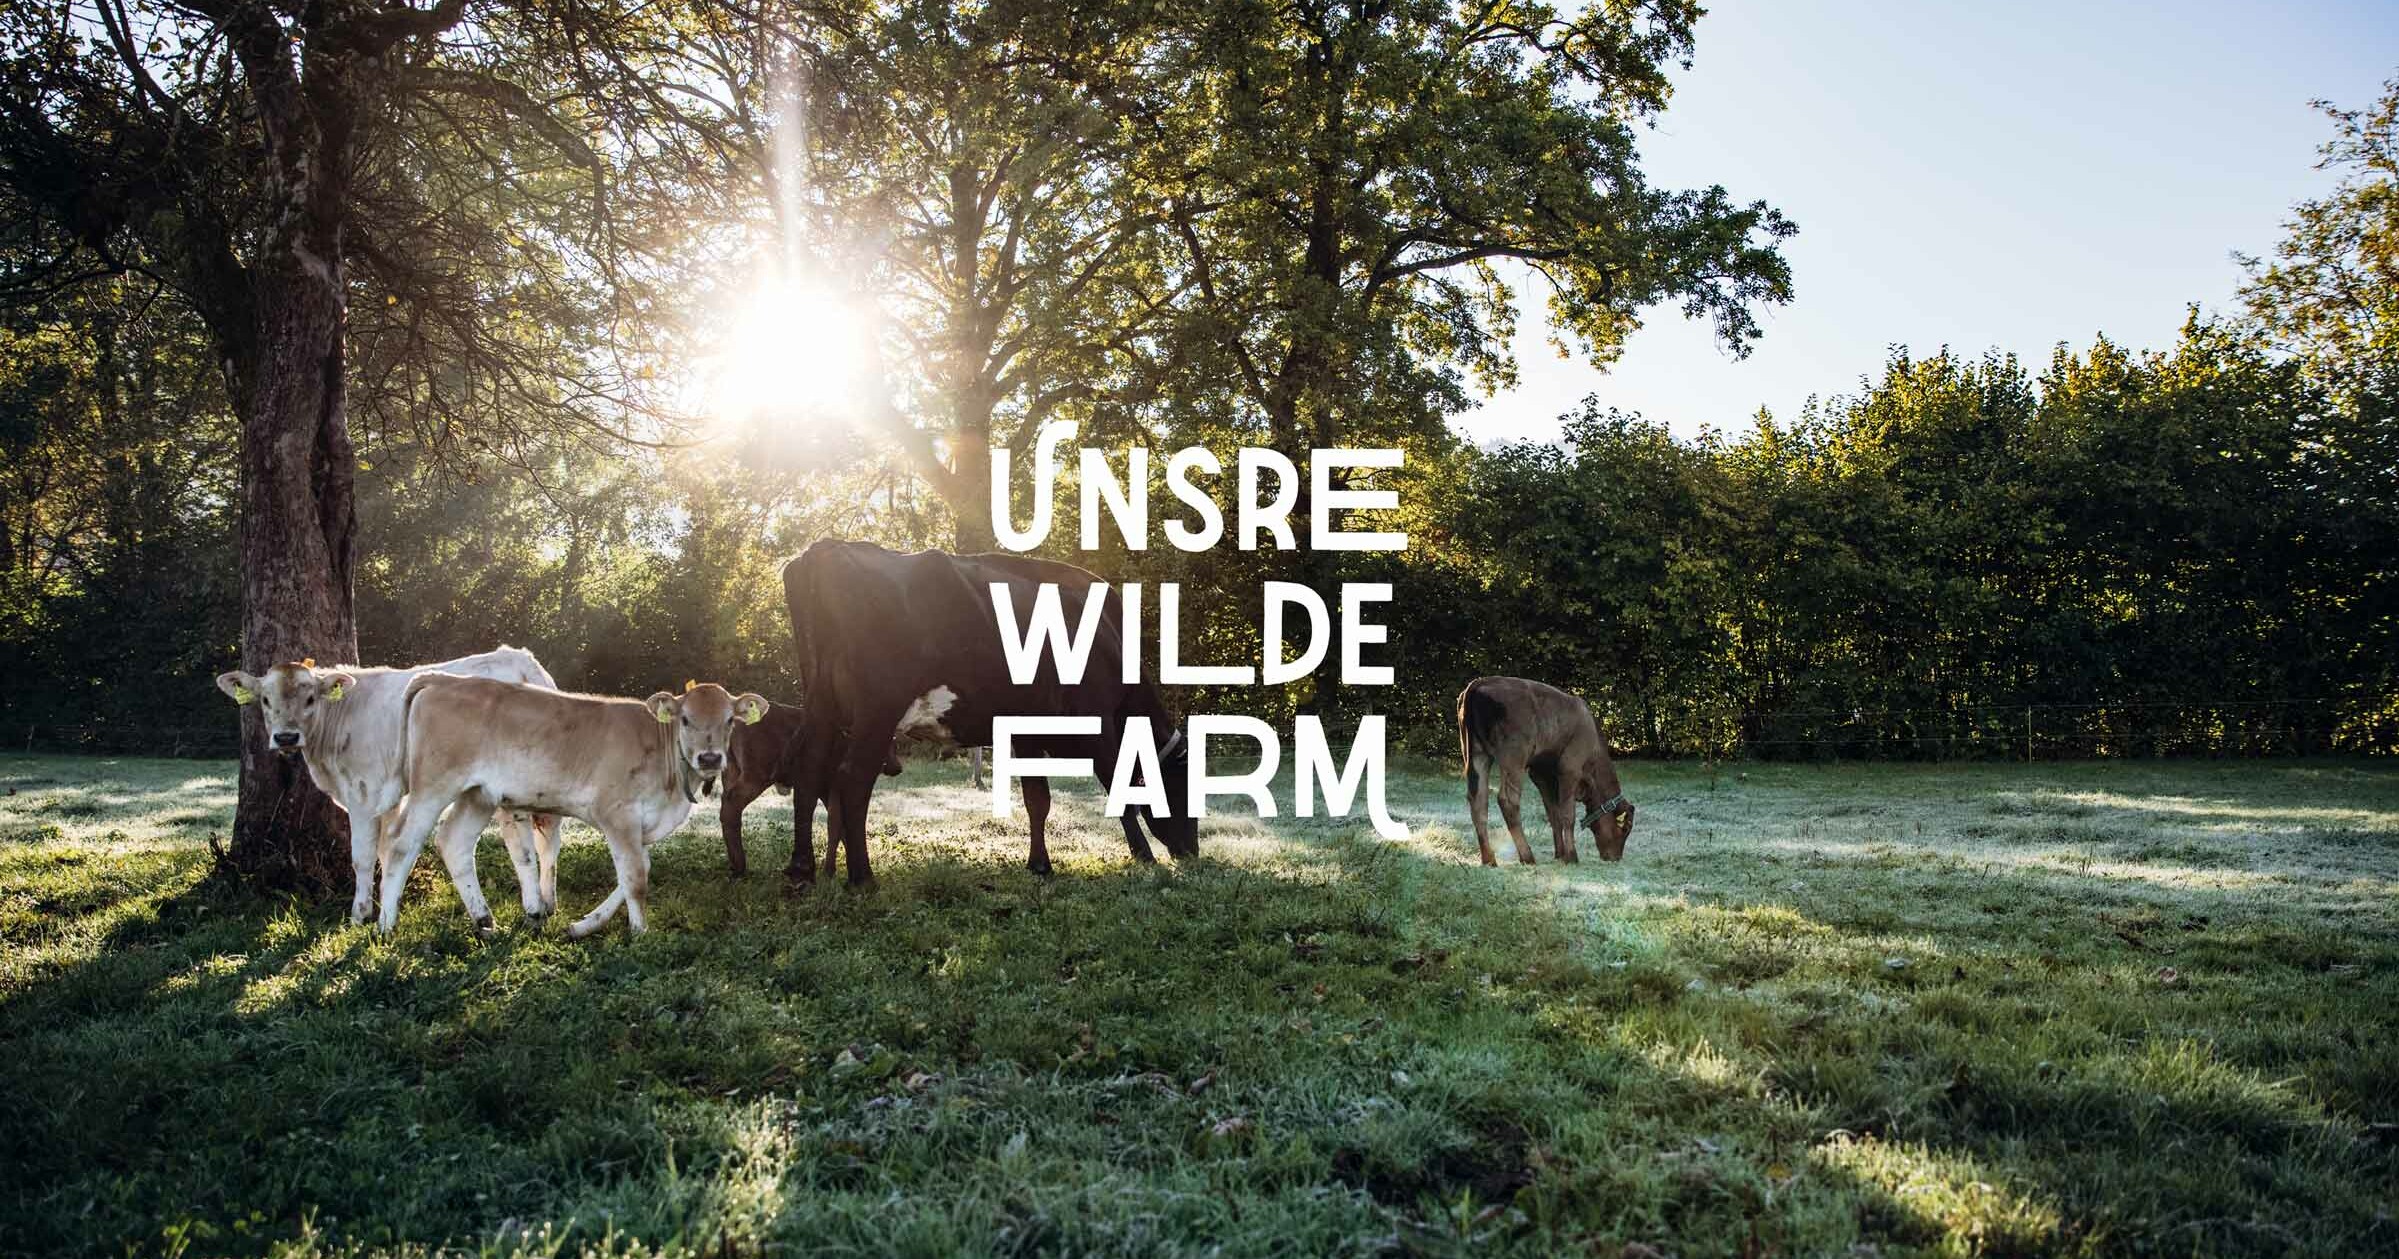 (c) Unsre-wilde-farm.at